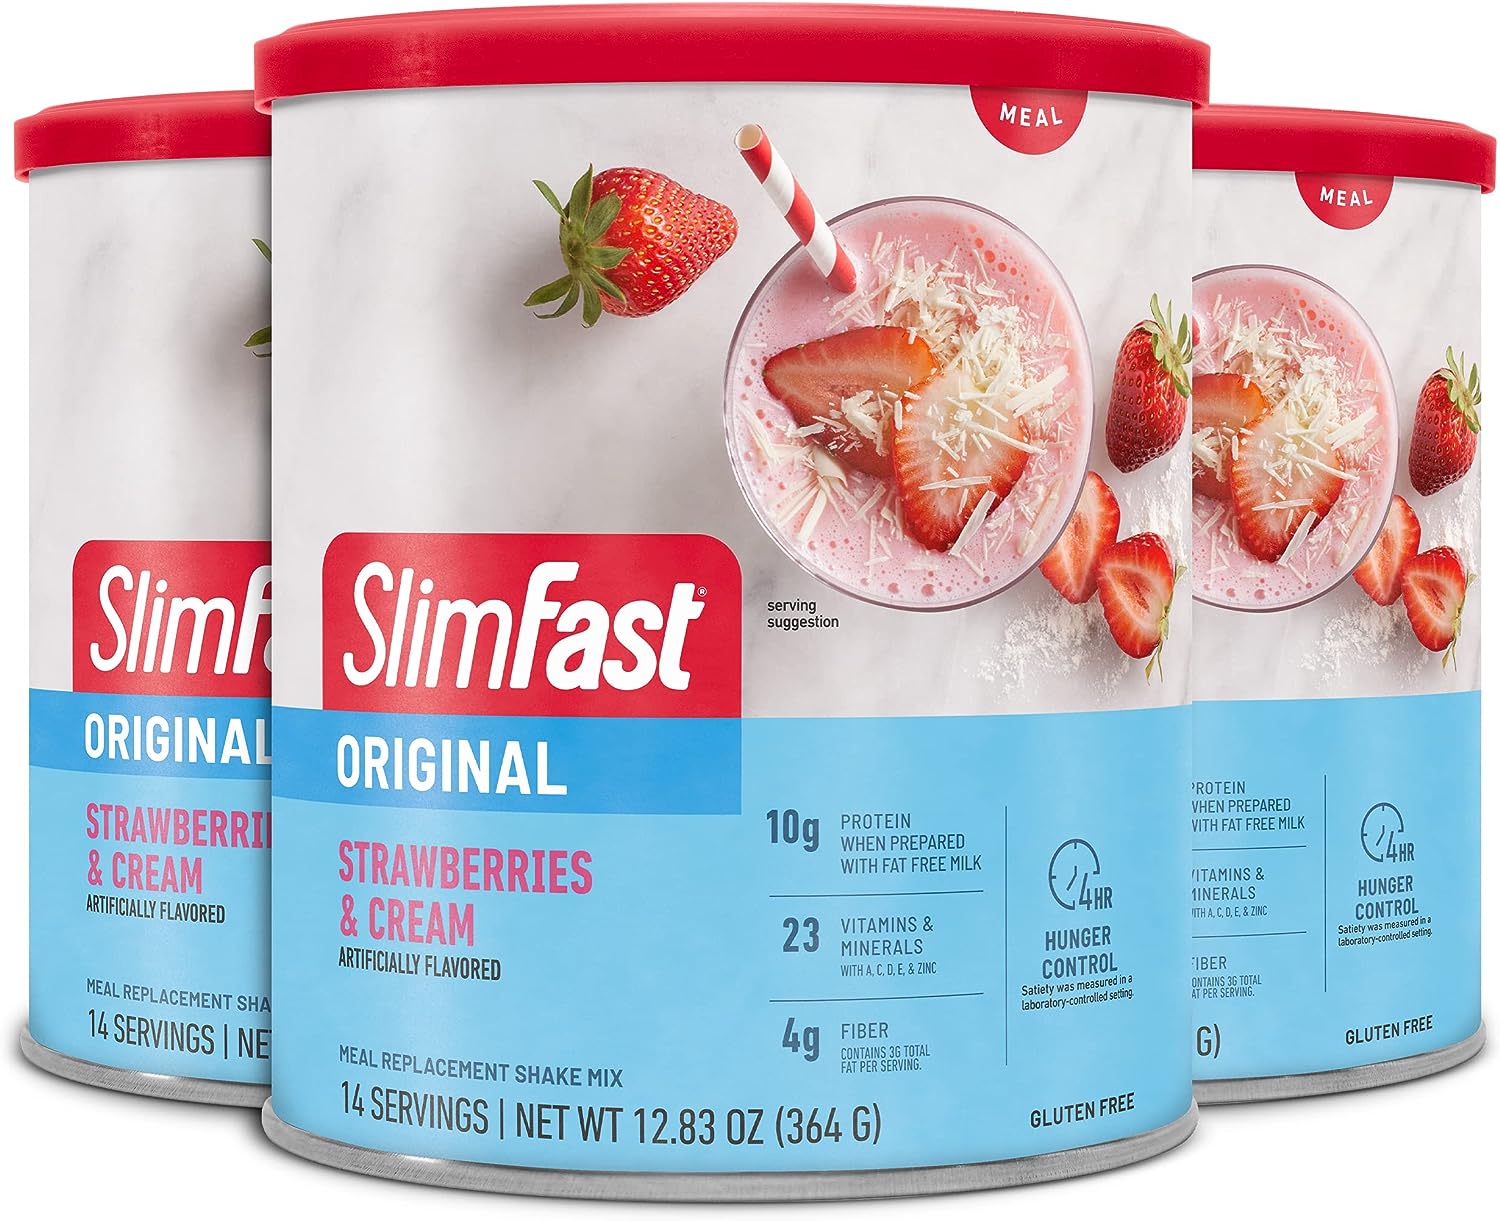 SlimFast Meal Replacement Powder, Original Strawberries & Cream, Shake2.41 Pounds